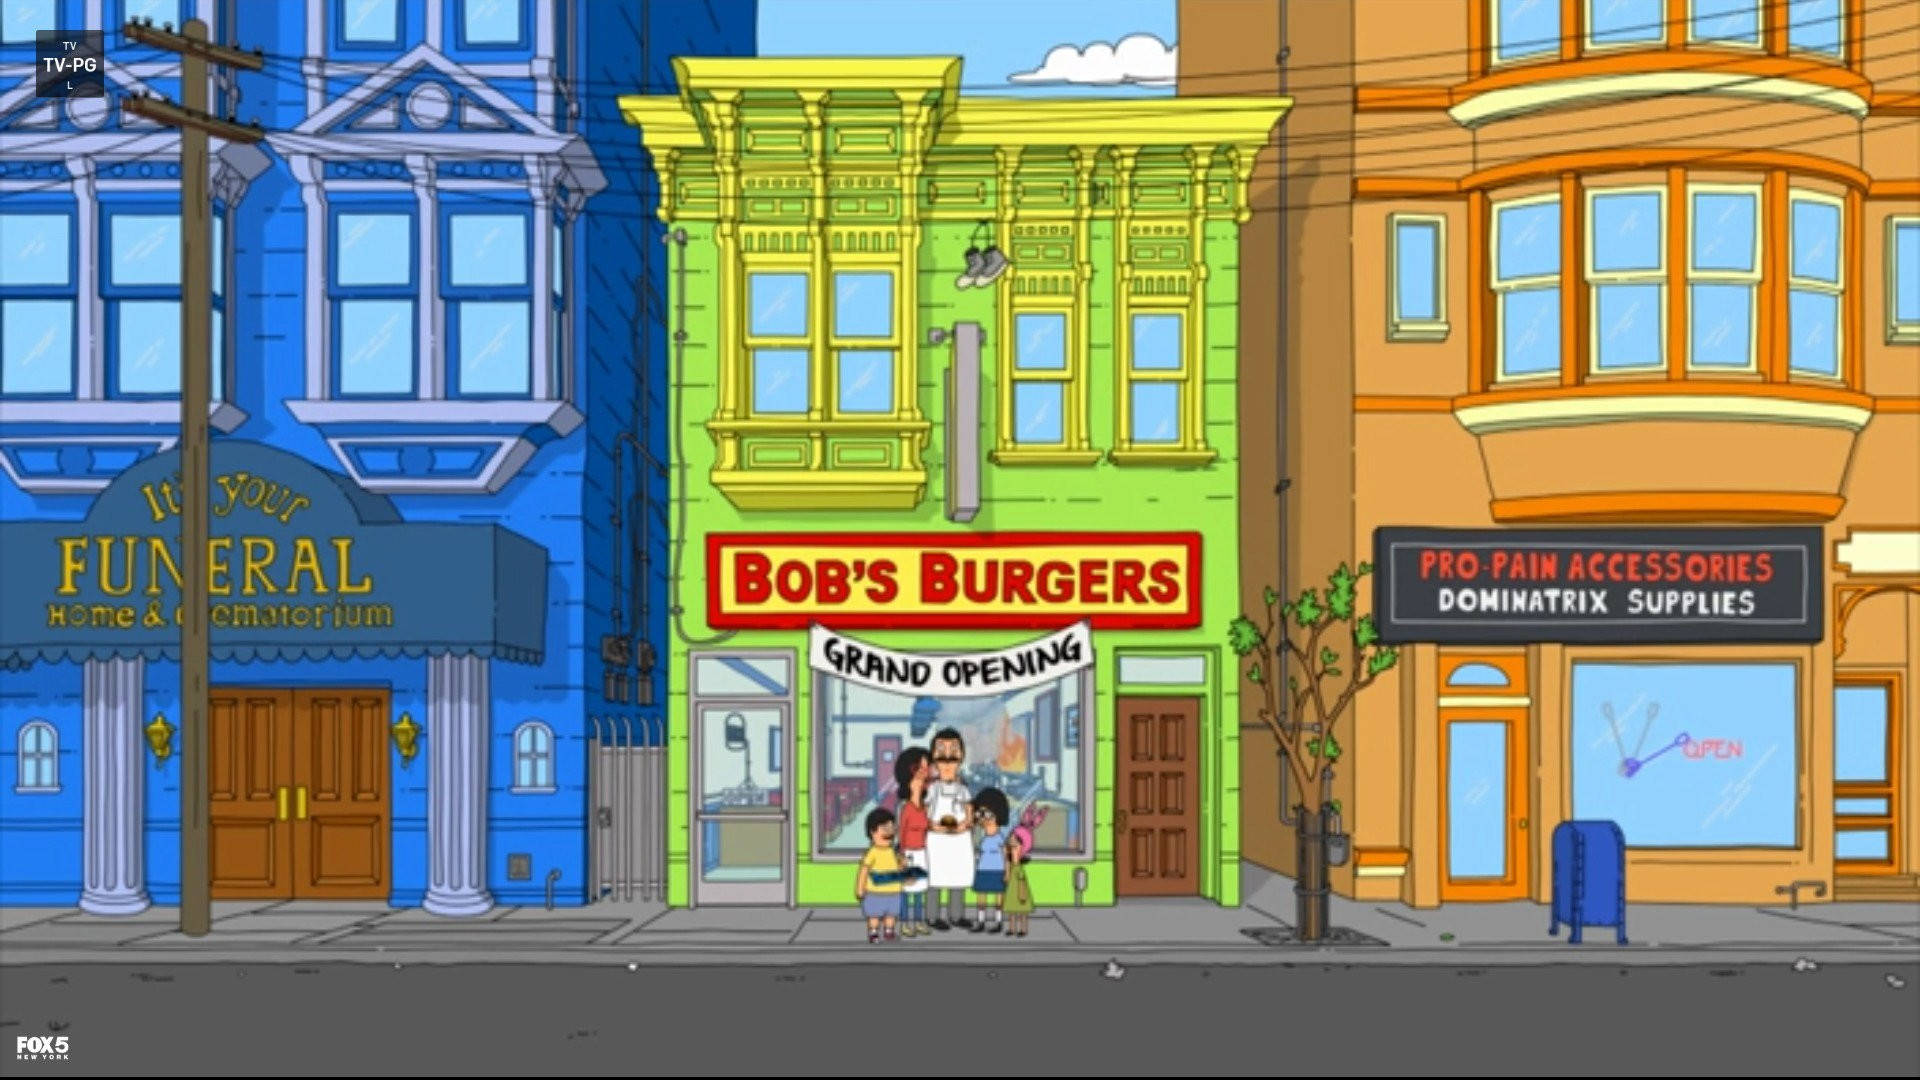 Bobs Burgers In Between Two Buildings Background